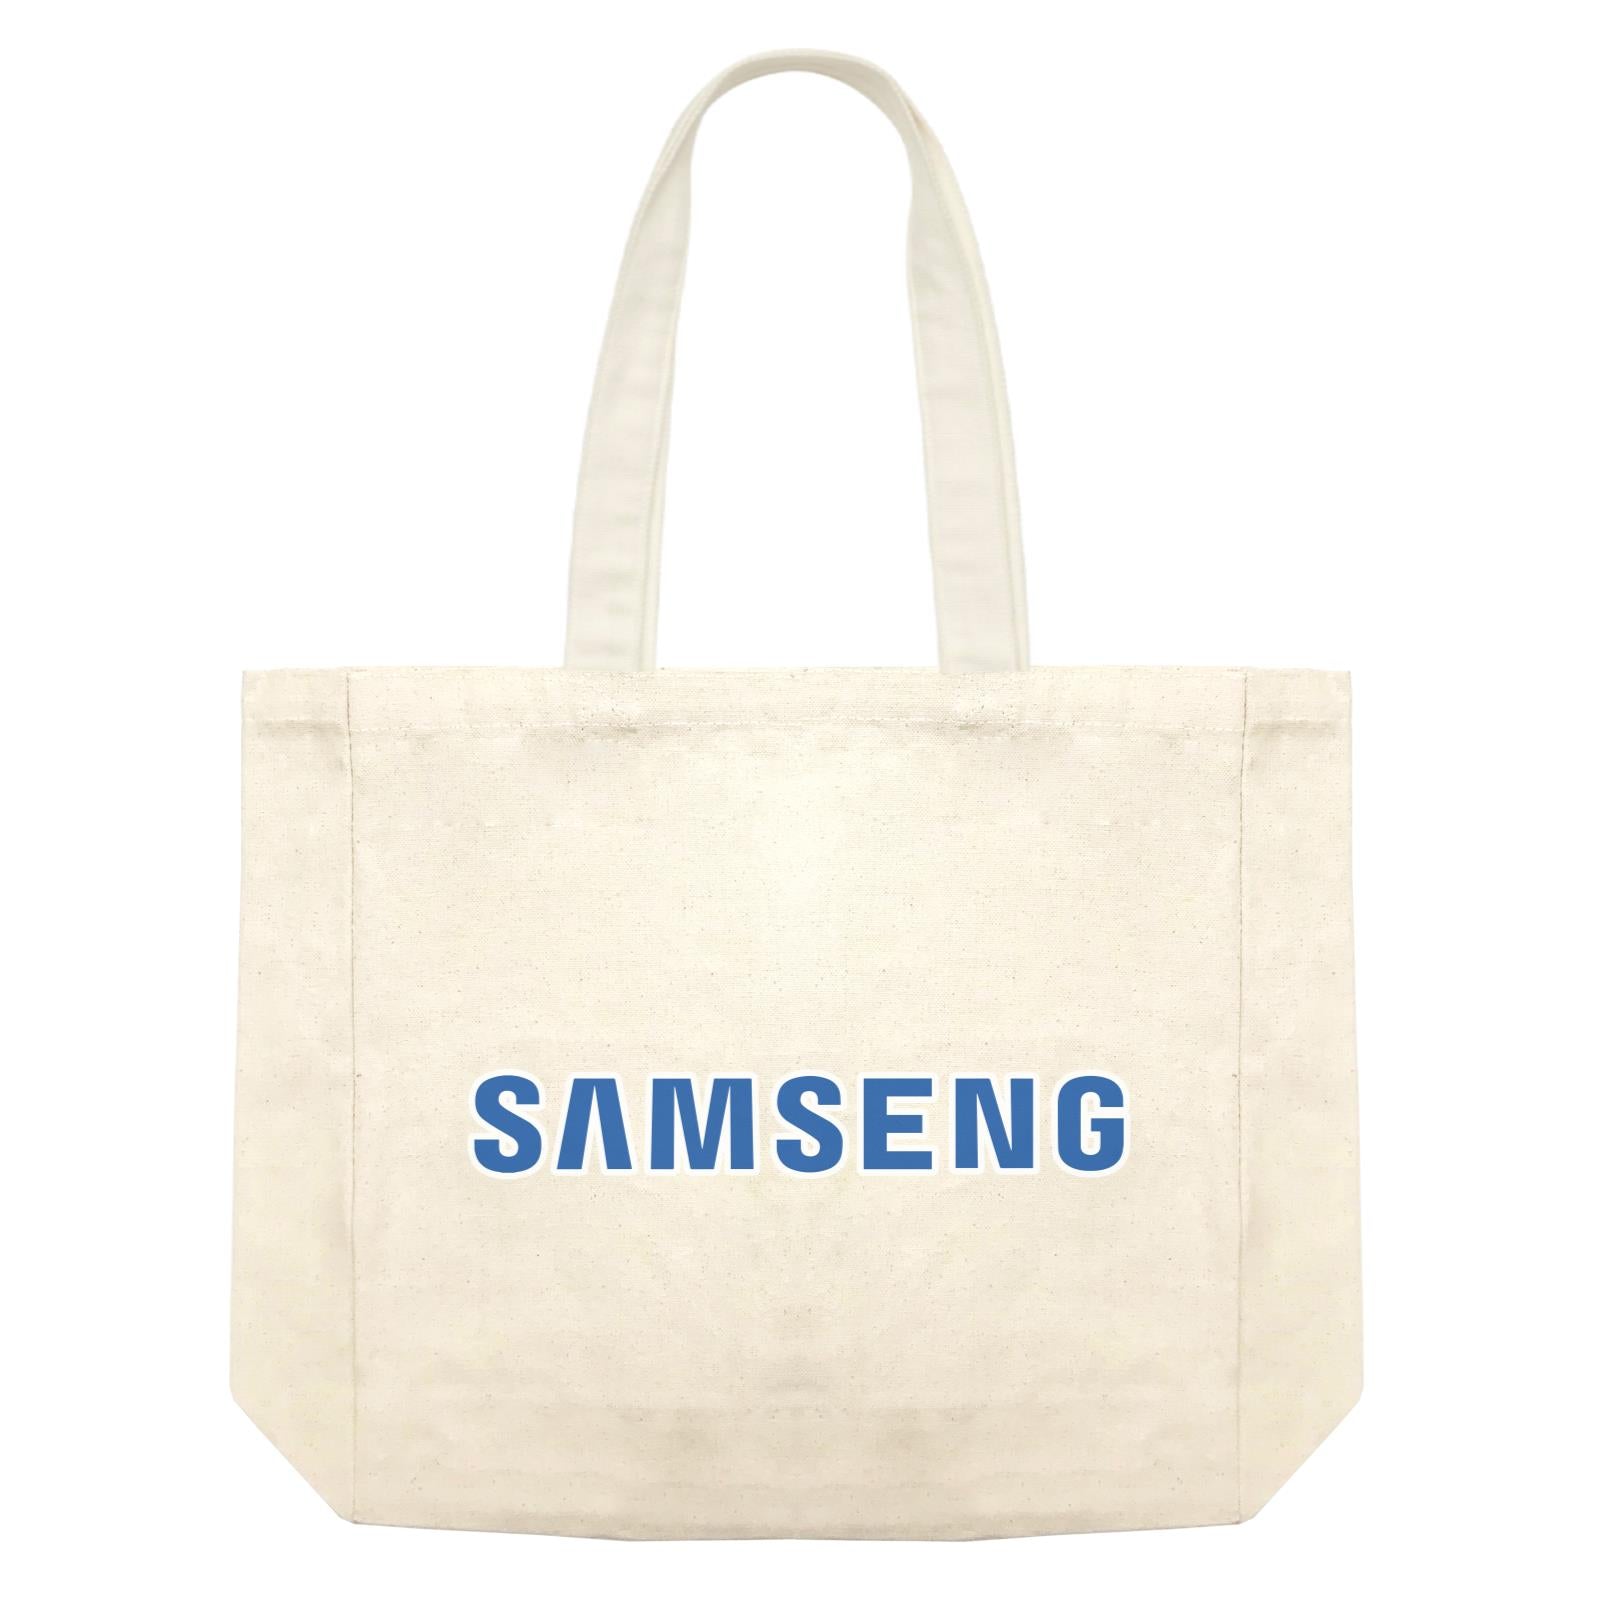 Slang Statement Samseng Accessories Shopping Bag